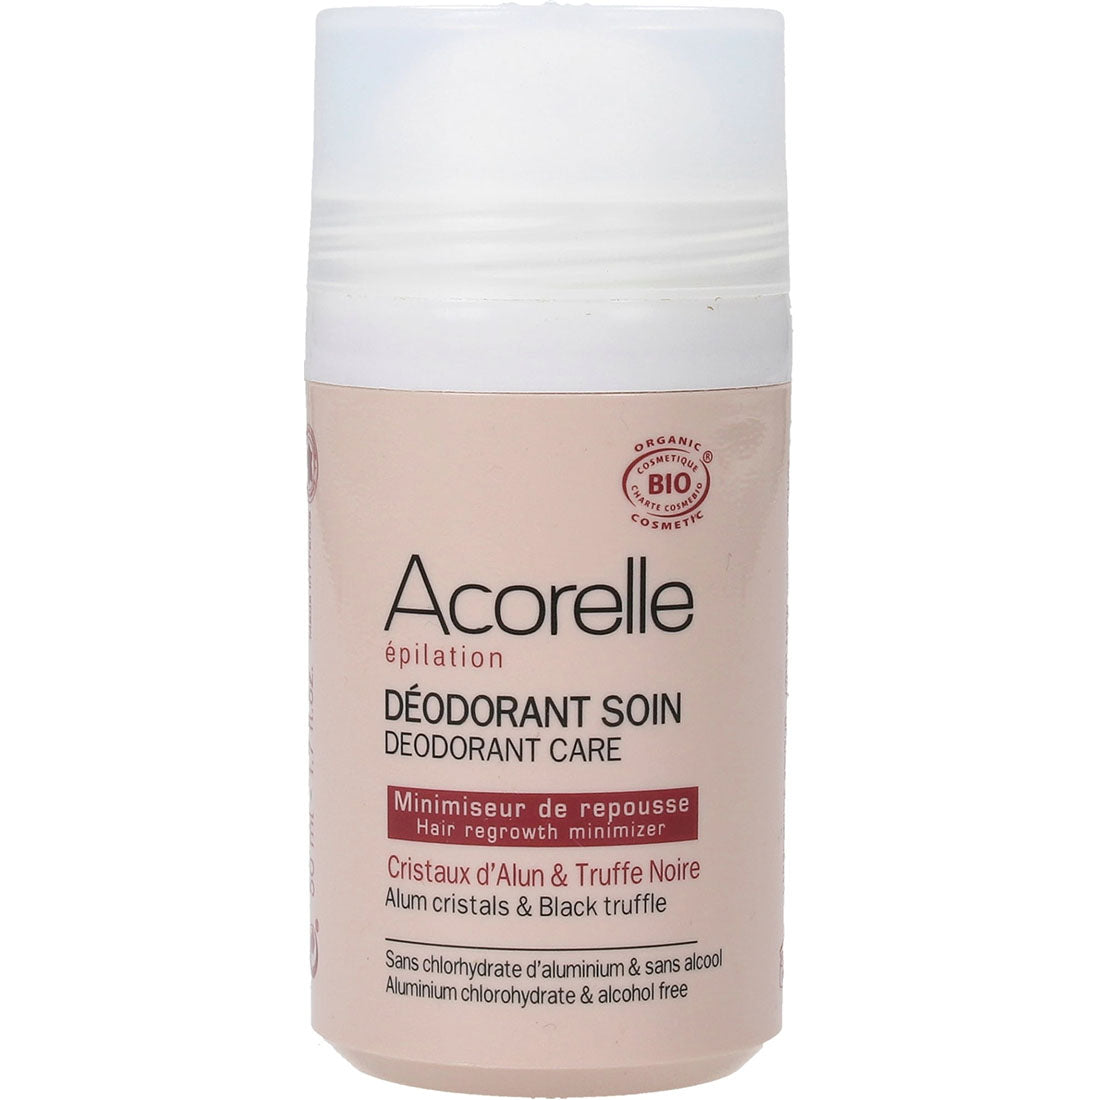 Acorelle Hair Regrowth Minimizer Deodorant, 50ml